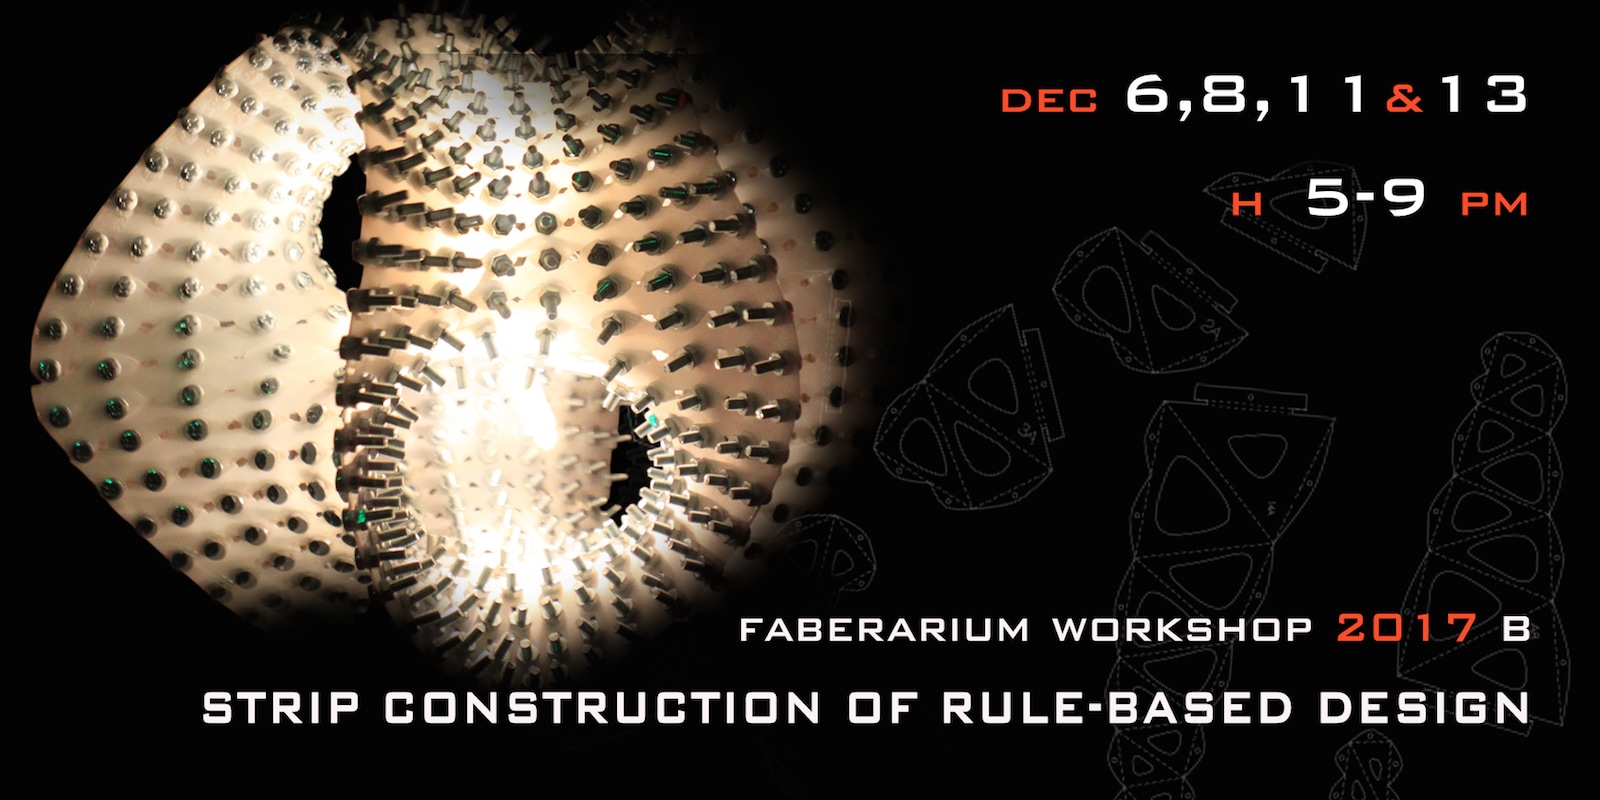 Archisearch Faberarium Workshop 2017b - Strip Construction of Ruled-based Design